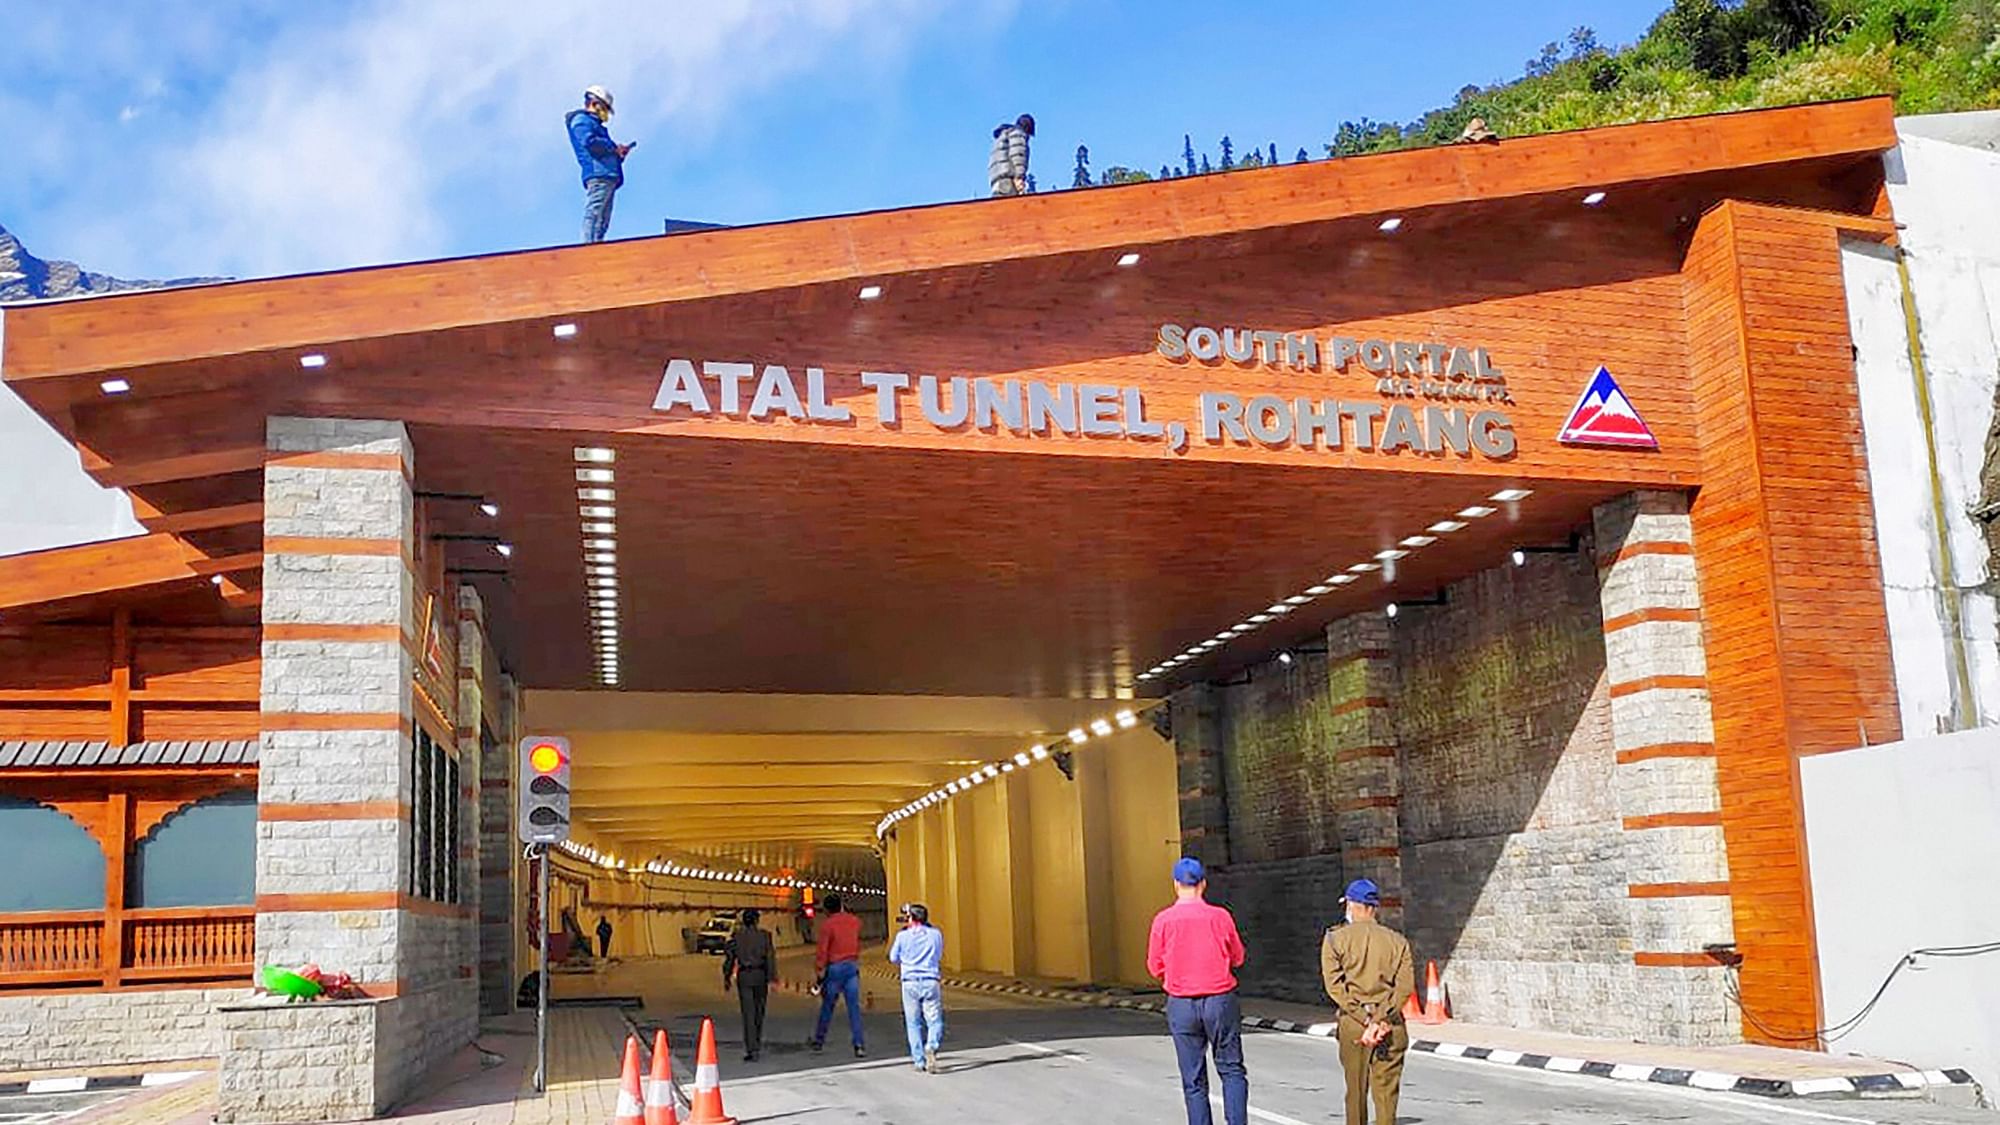 Prime Minister Modi will inaugurate the Atal Tunnel on Saturday, 3 October.